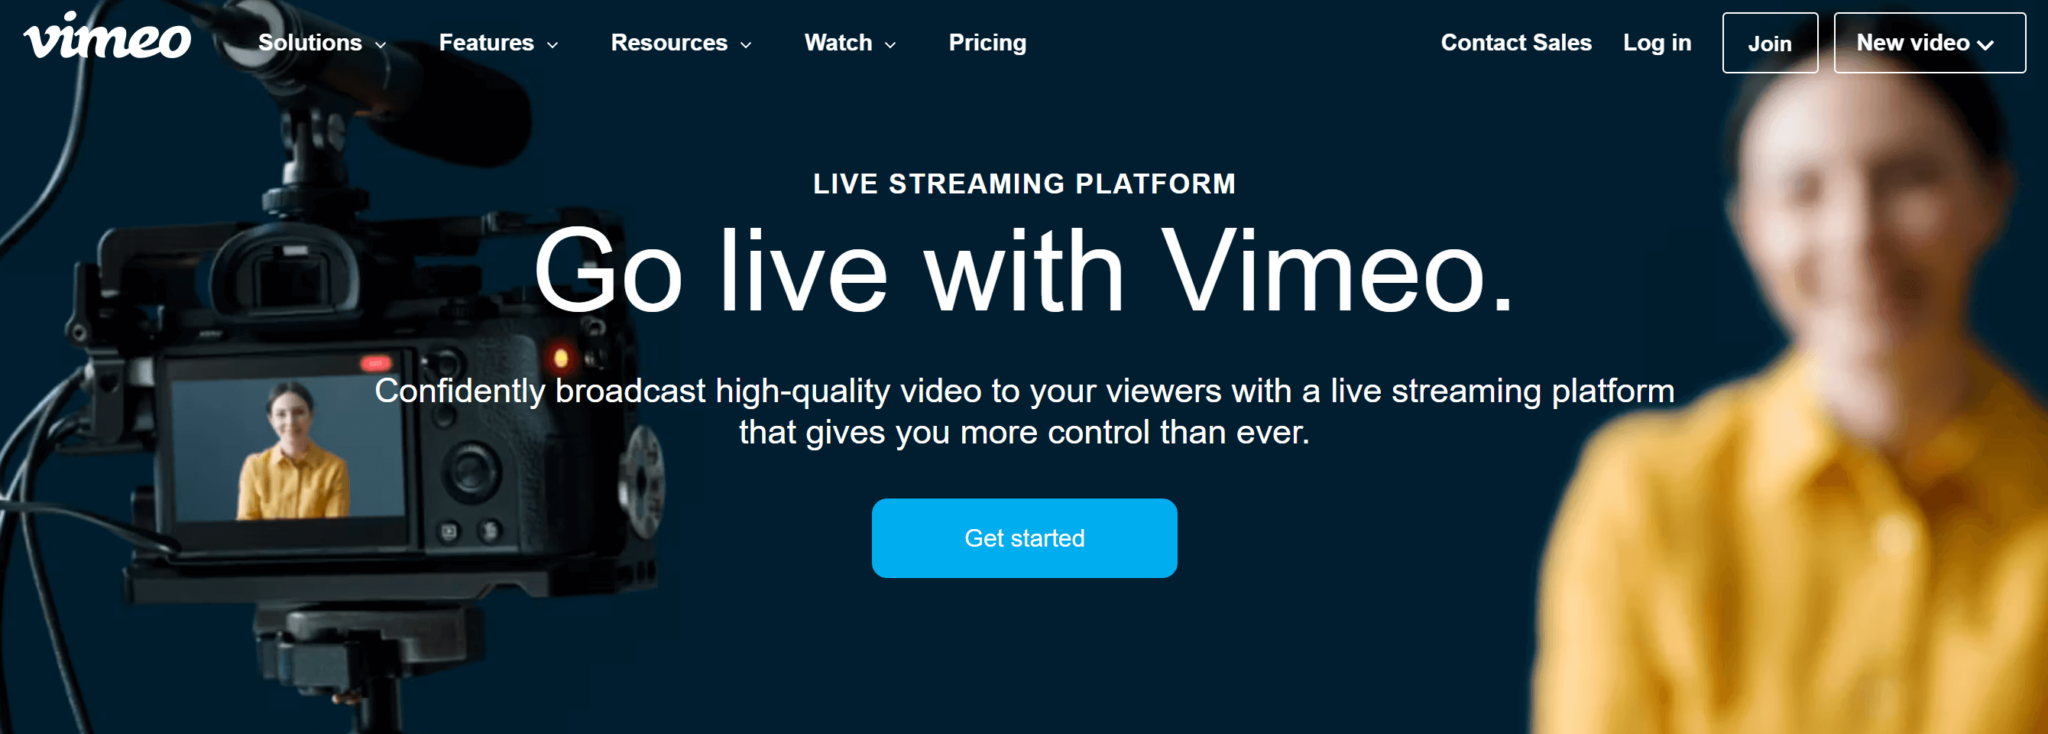 Vimeo Livestream